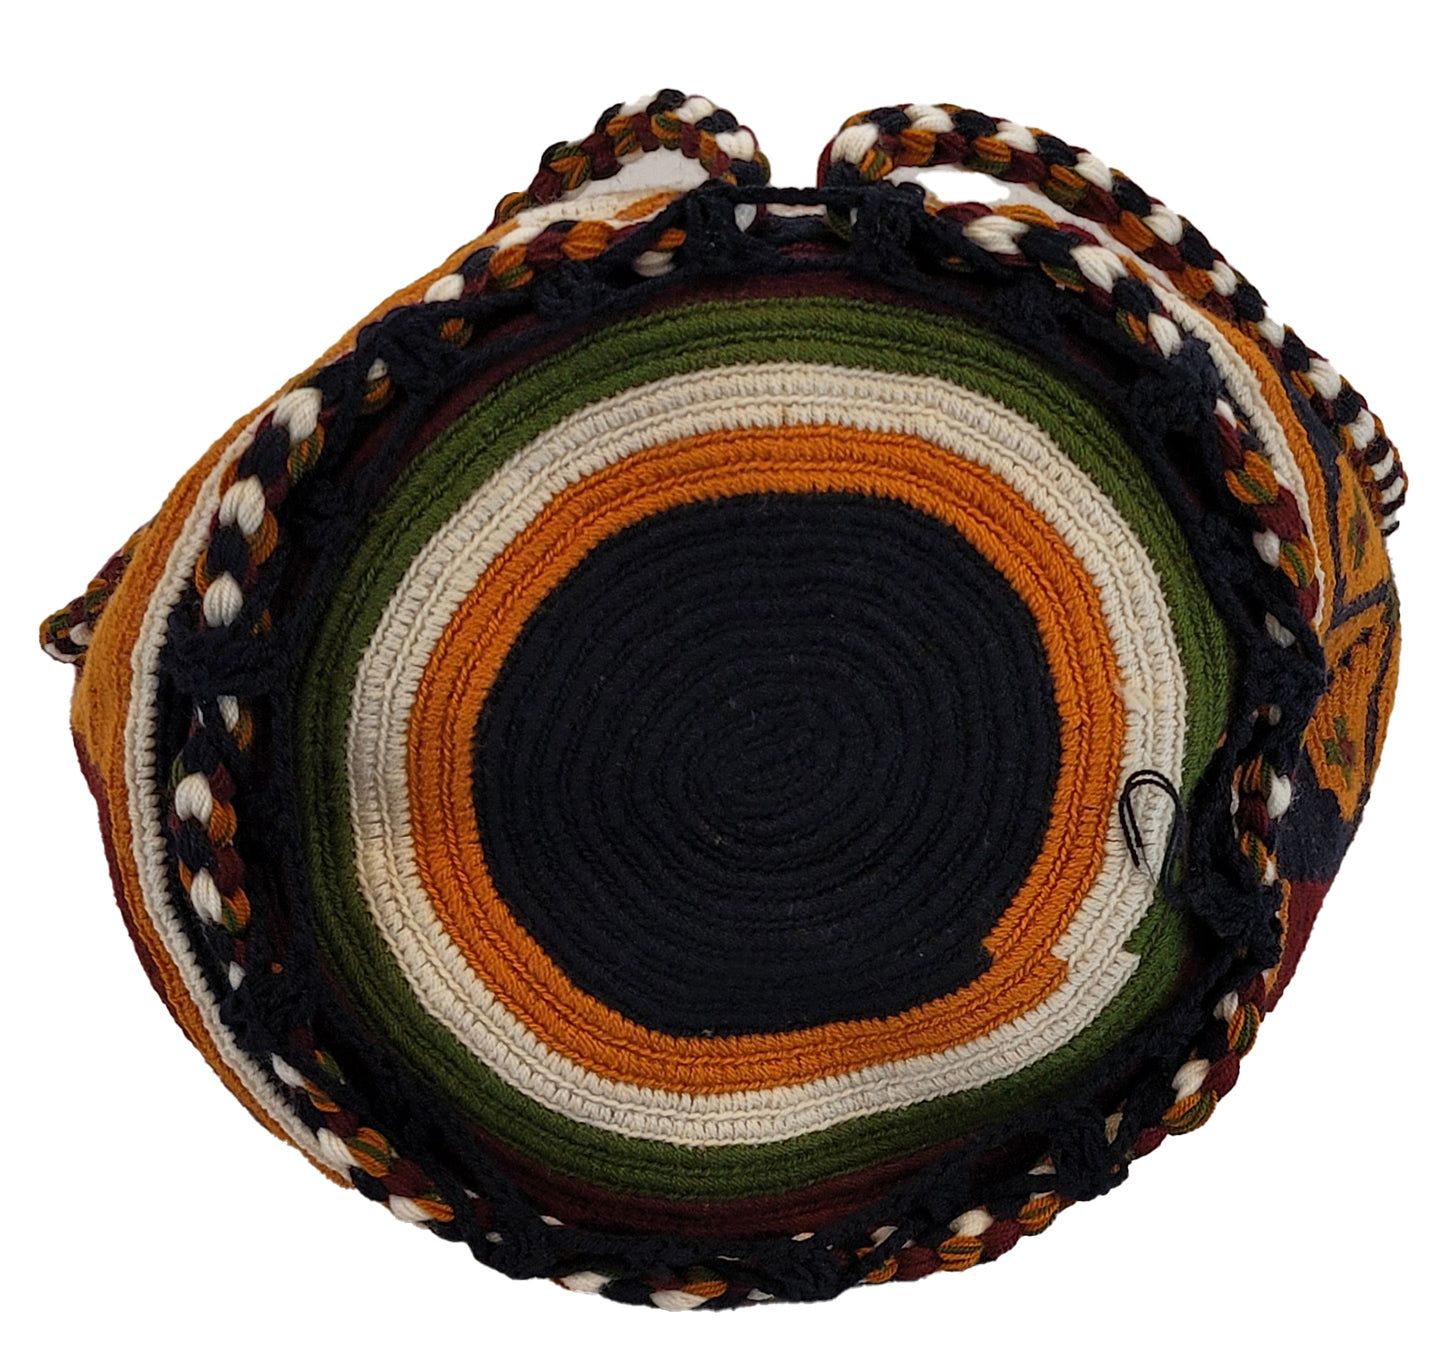 Aliana Traditional Wayuu Crochet Backpack - Wuitusu-bottom view